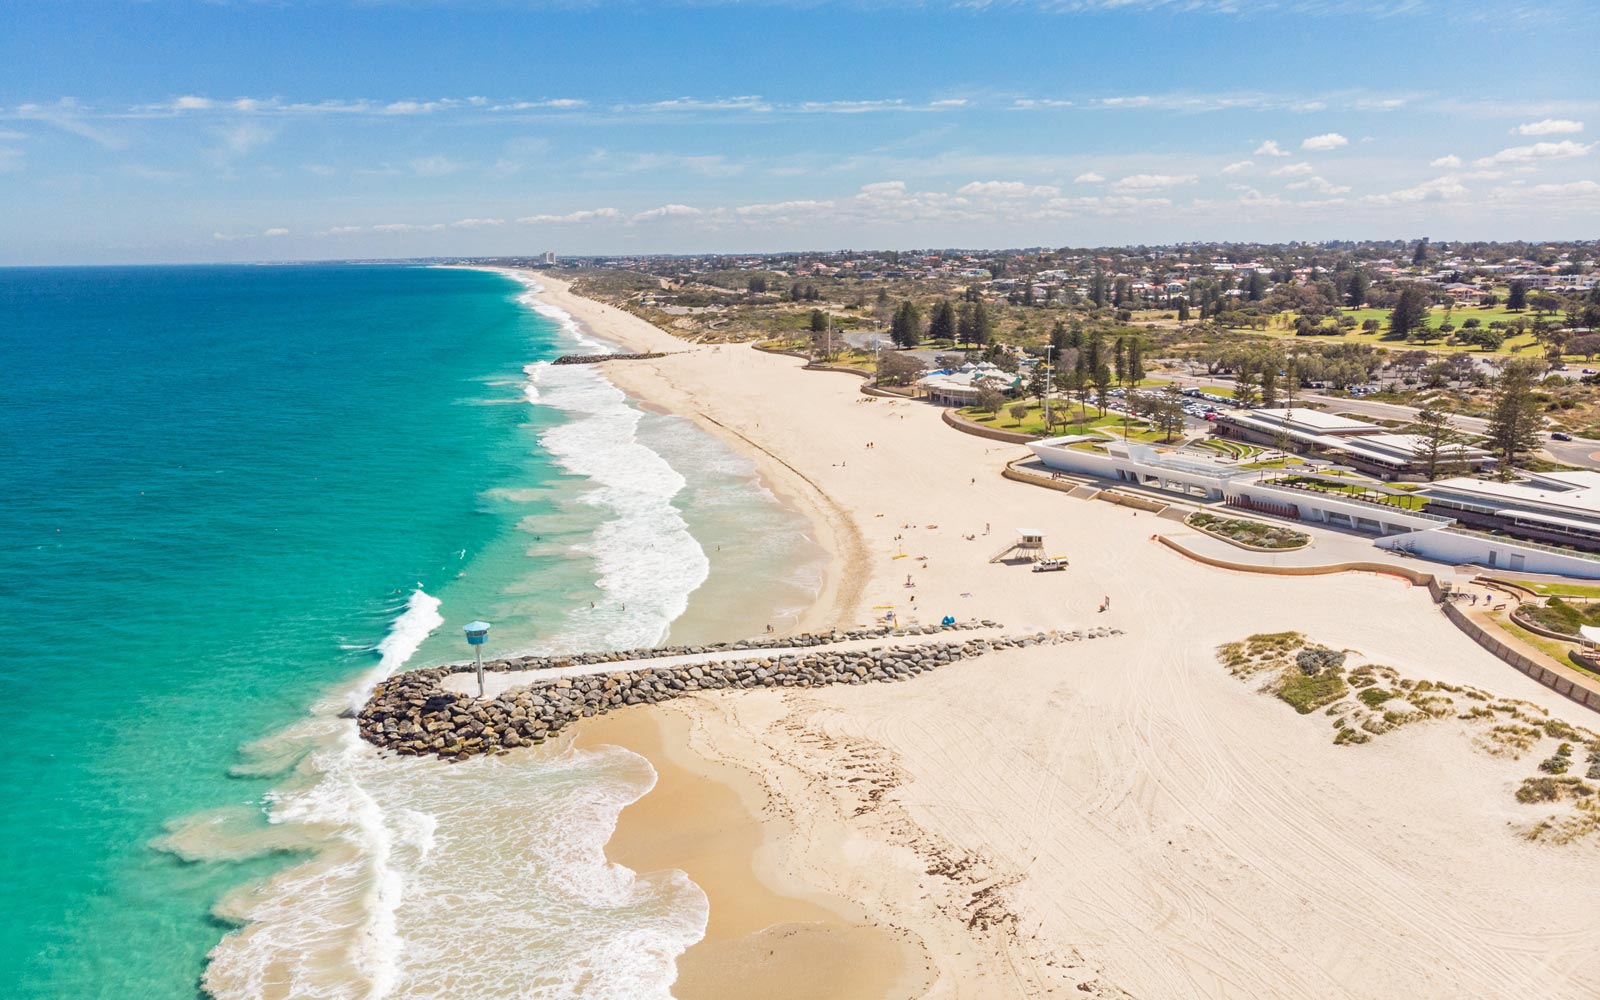 City Beach / Western Australia / Australia // World Beach Guide